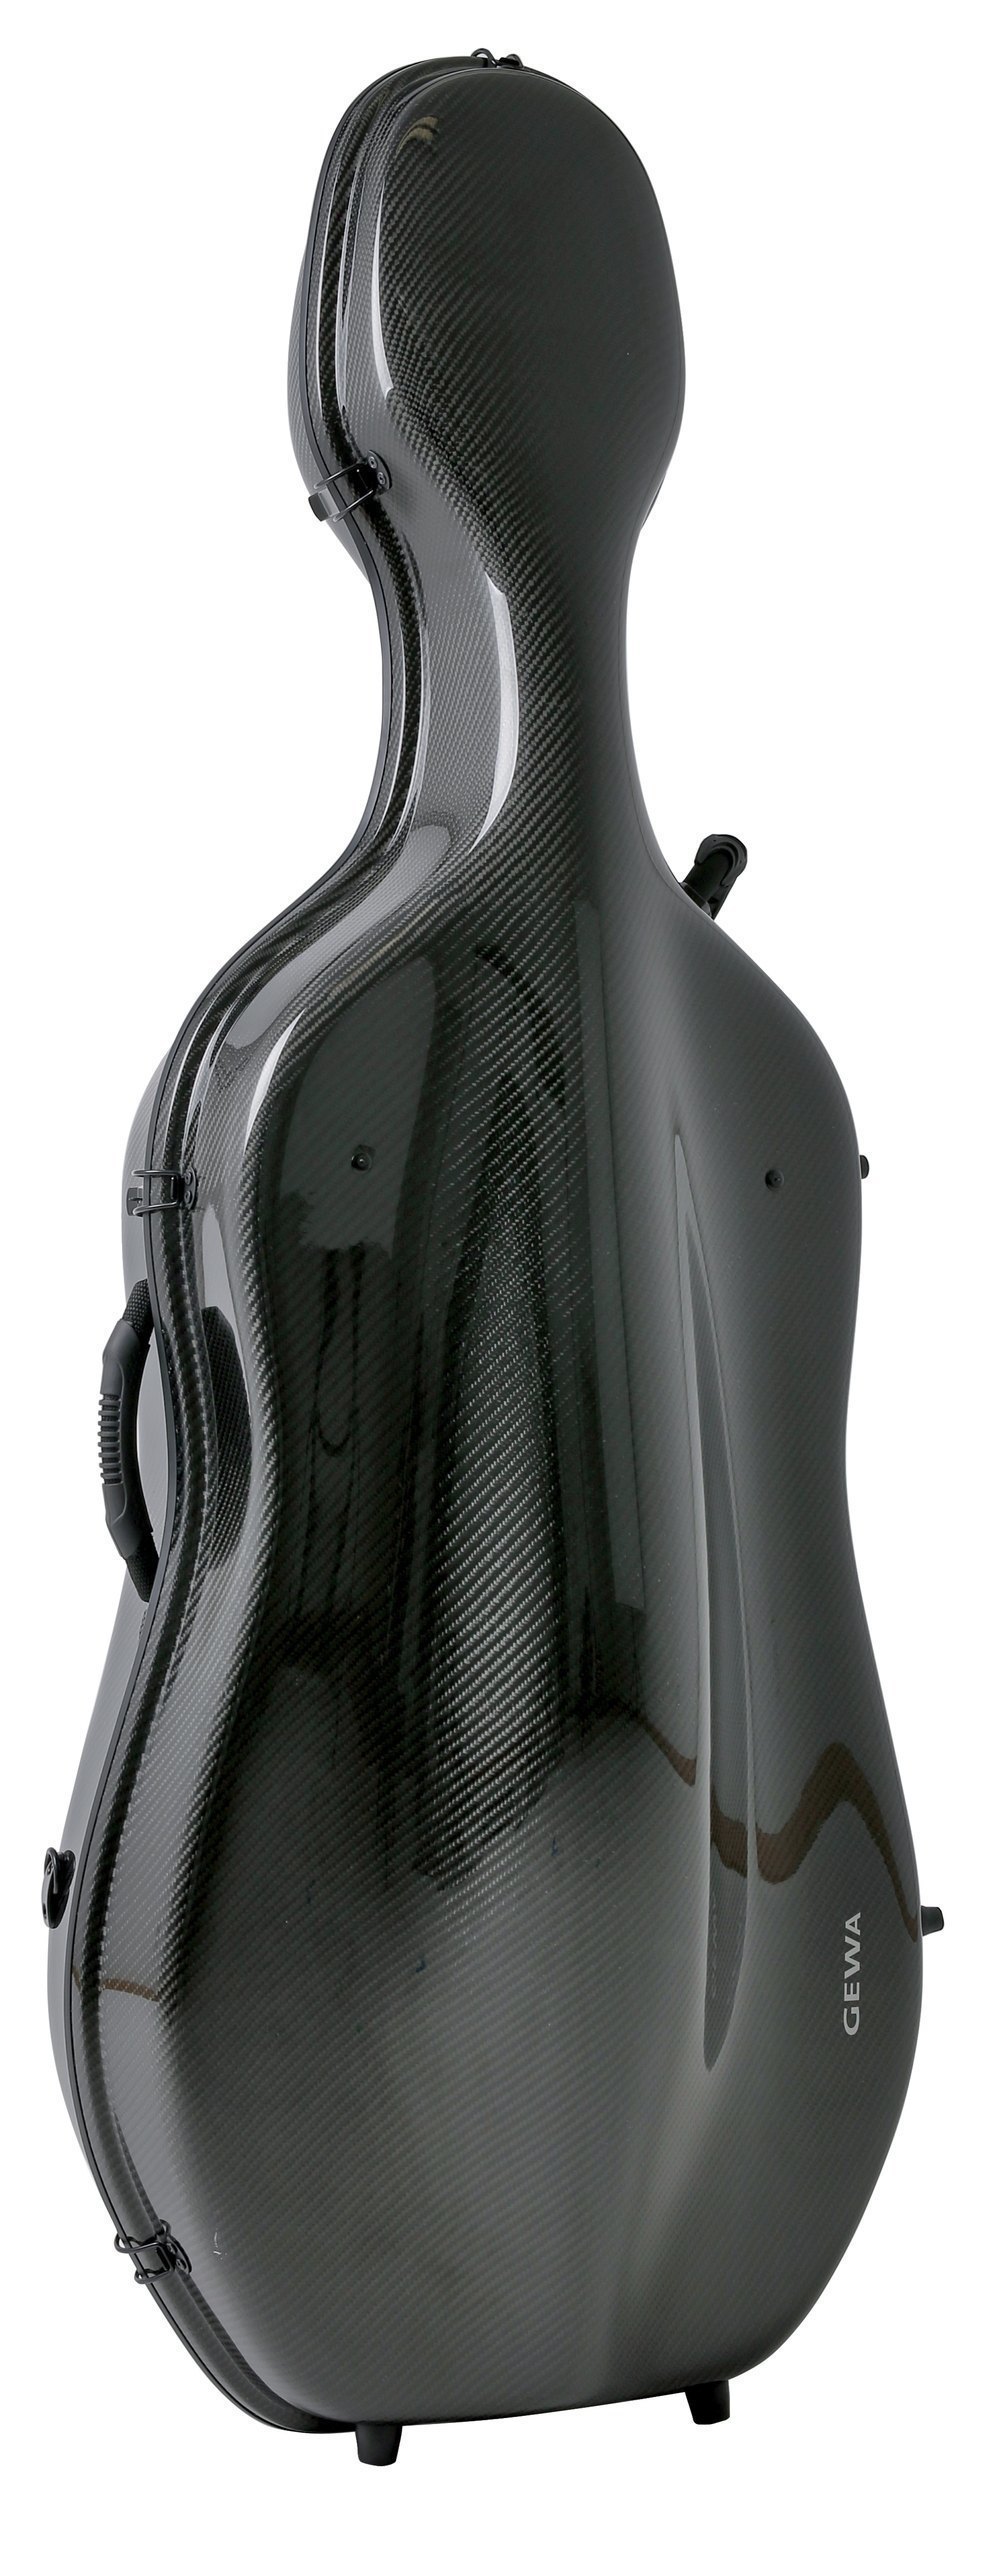 Cello case Idea Original Carbon 2.9 Black/anthracite